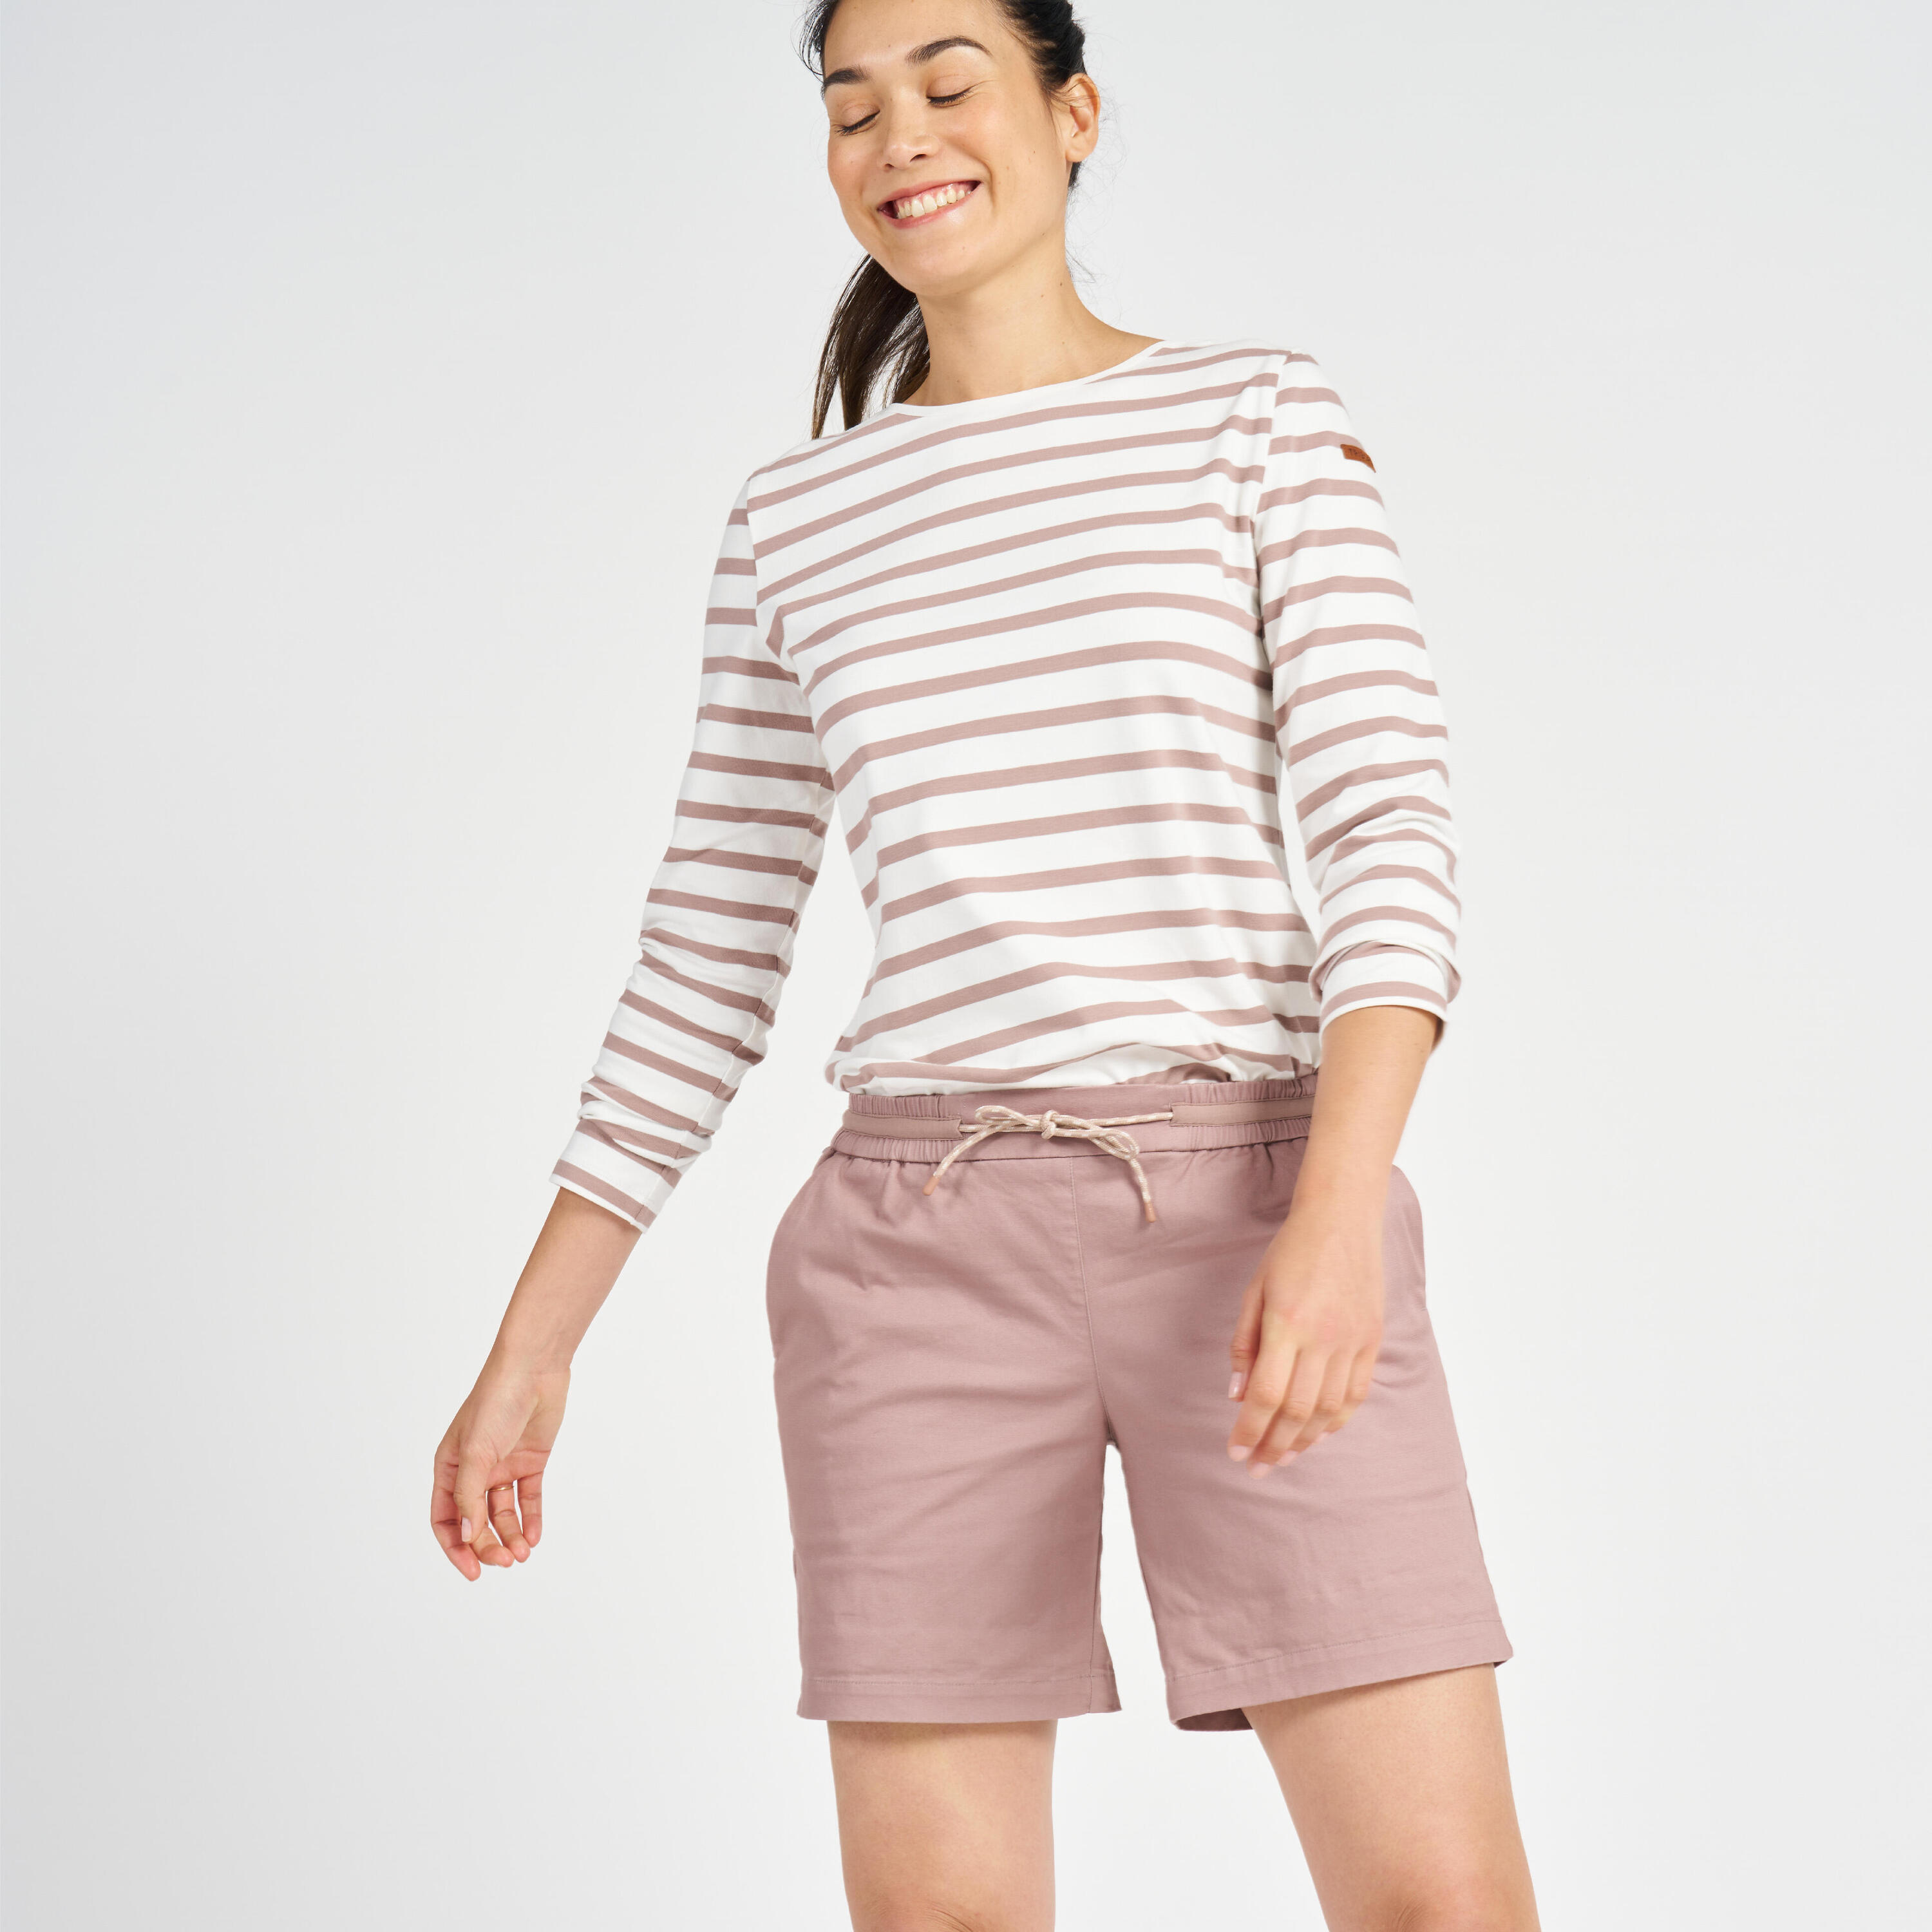 Sailing 100 Women's Sailing Shorts-Taupe Pink 8/8